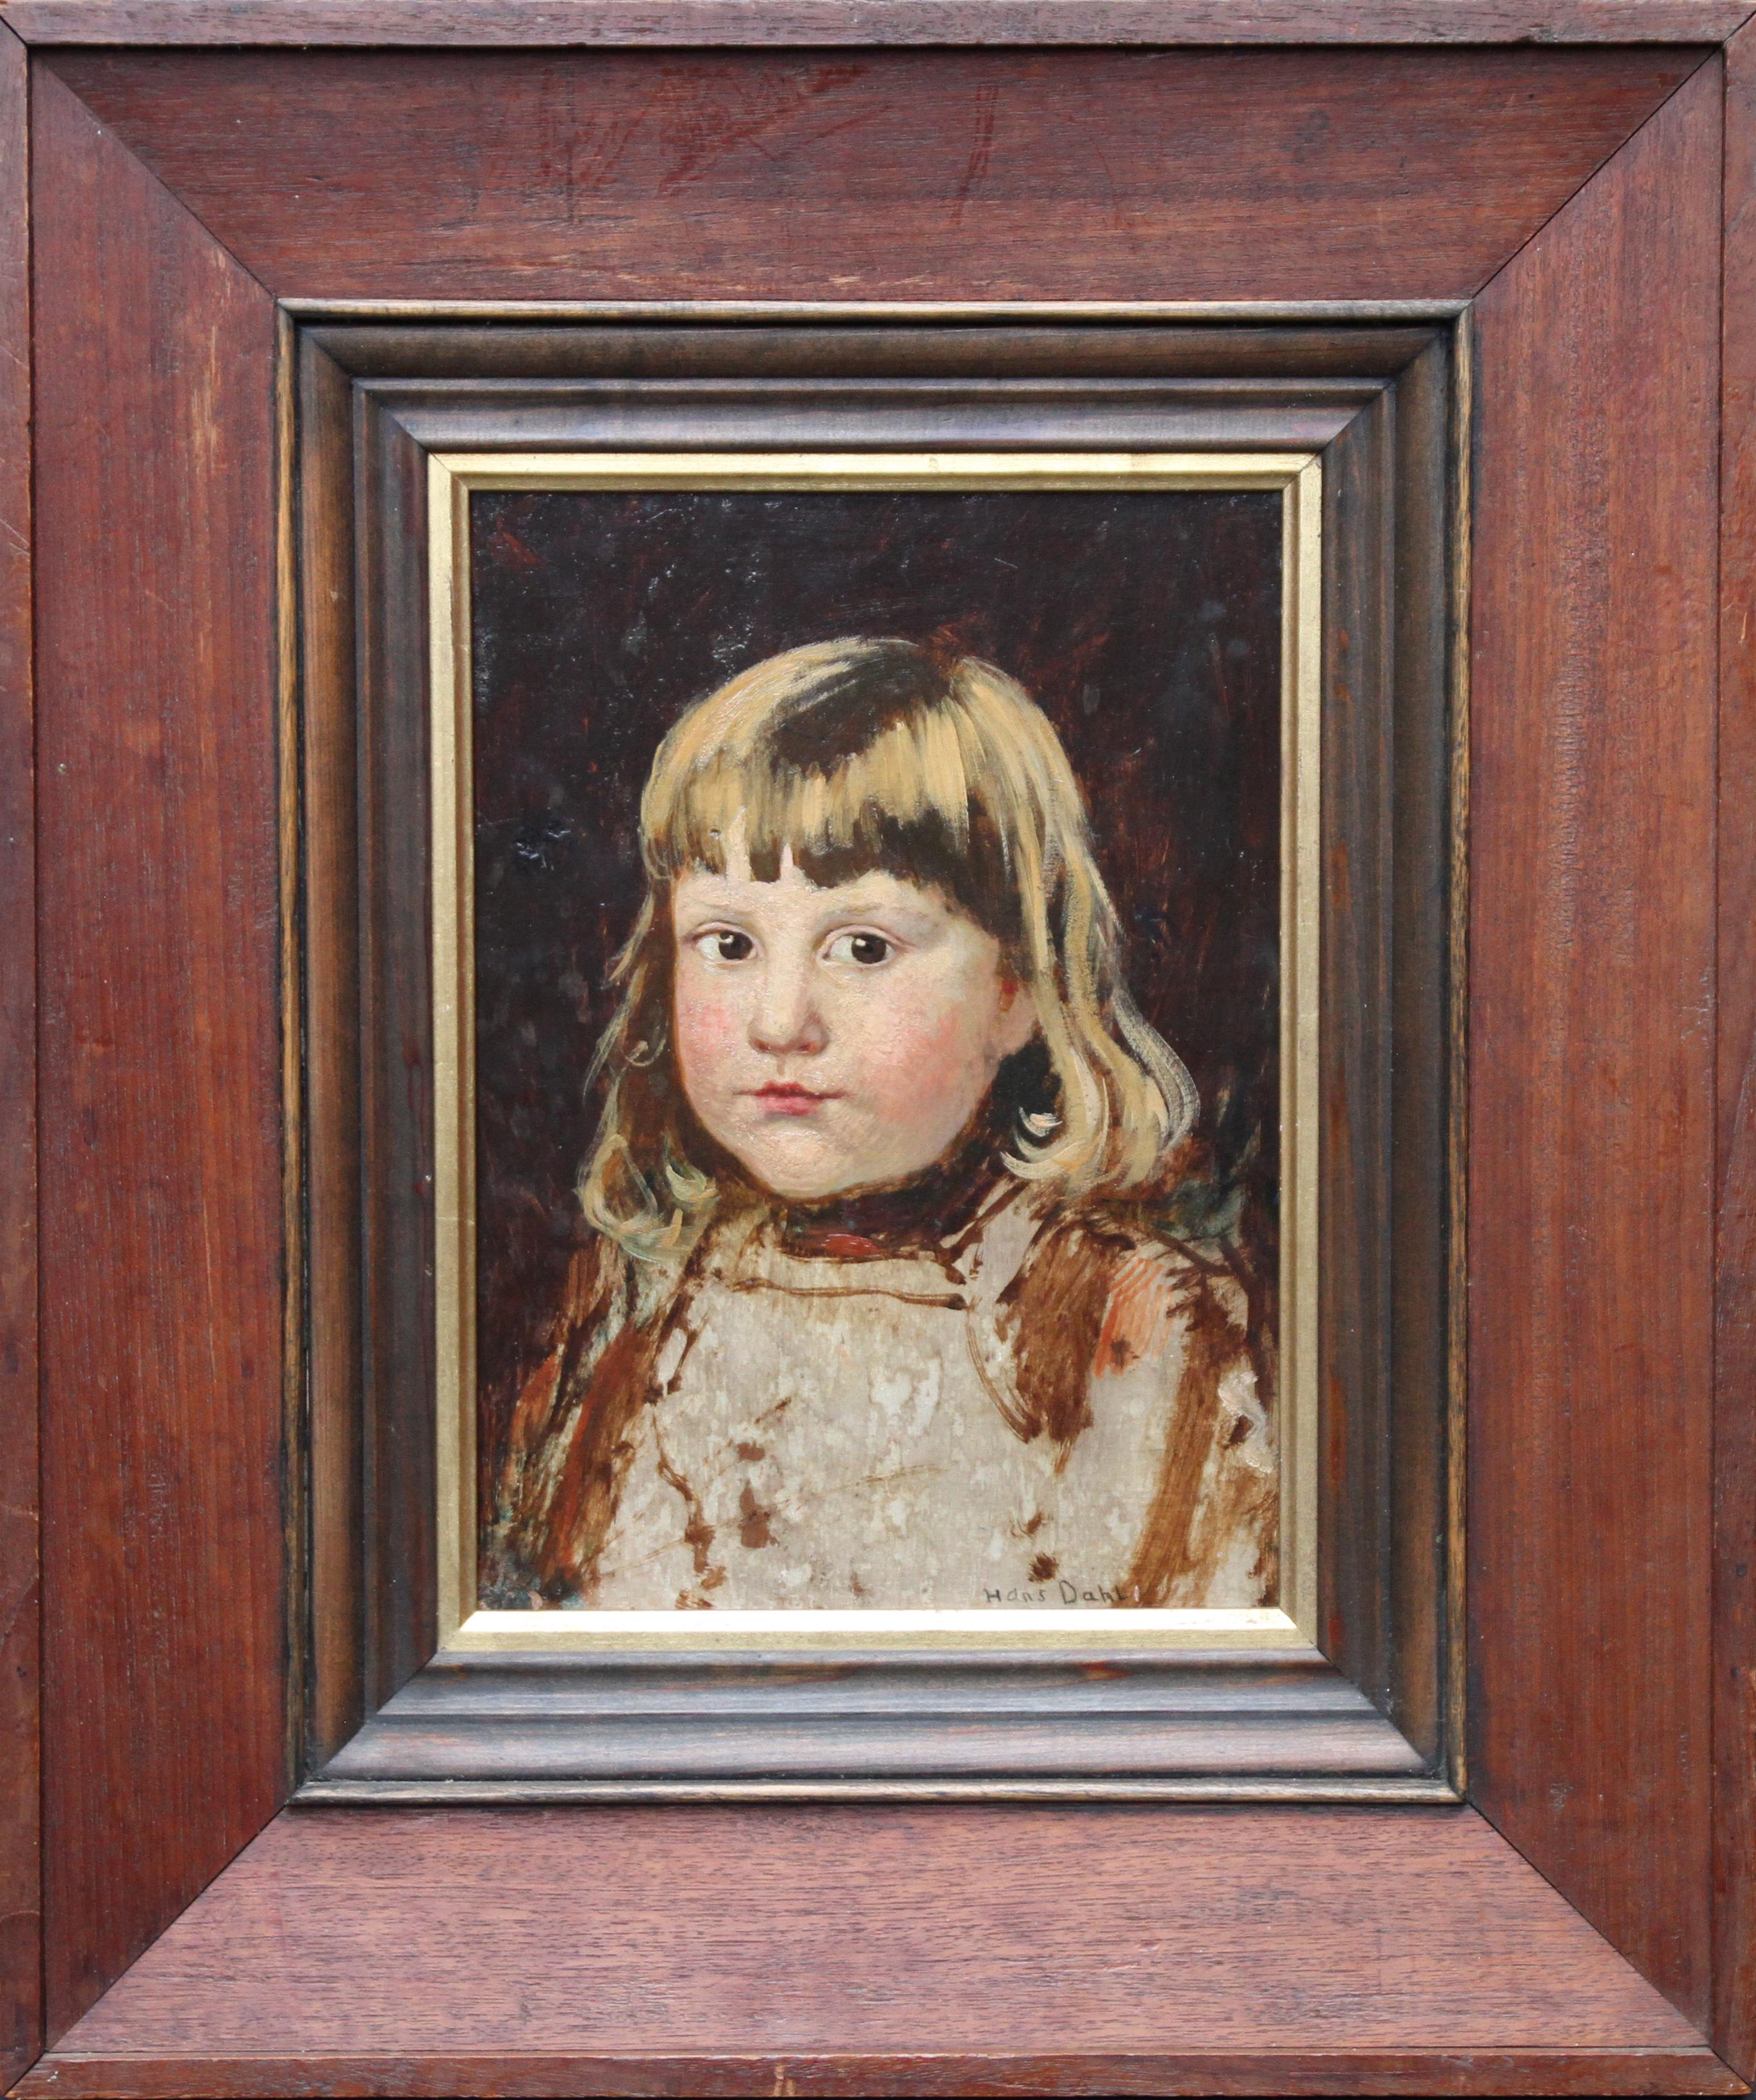 Hans Dahl Portrait Painting - Portrait of a Young Girl - Norwegian 19th century Impressionist art oil painting